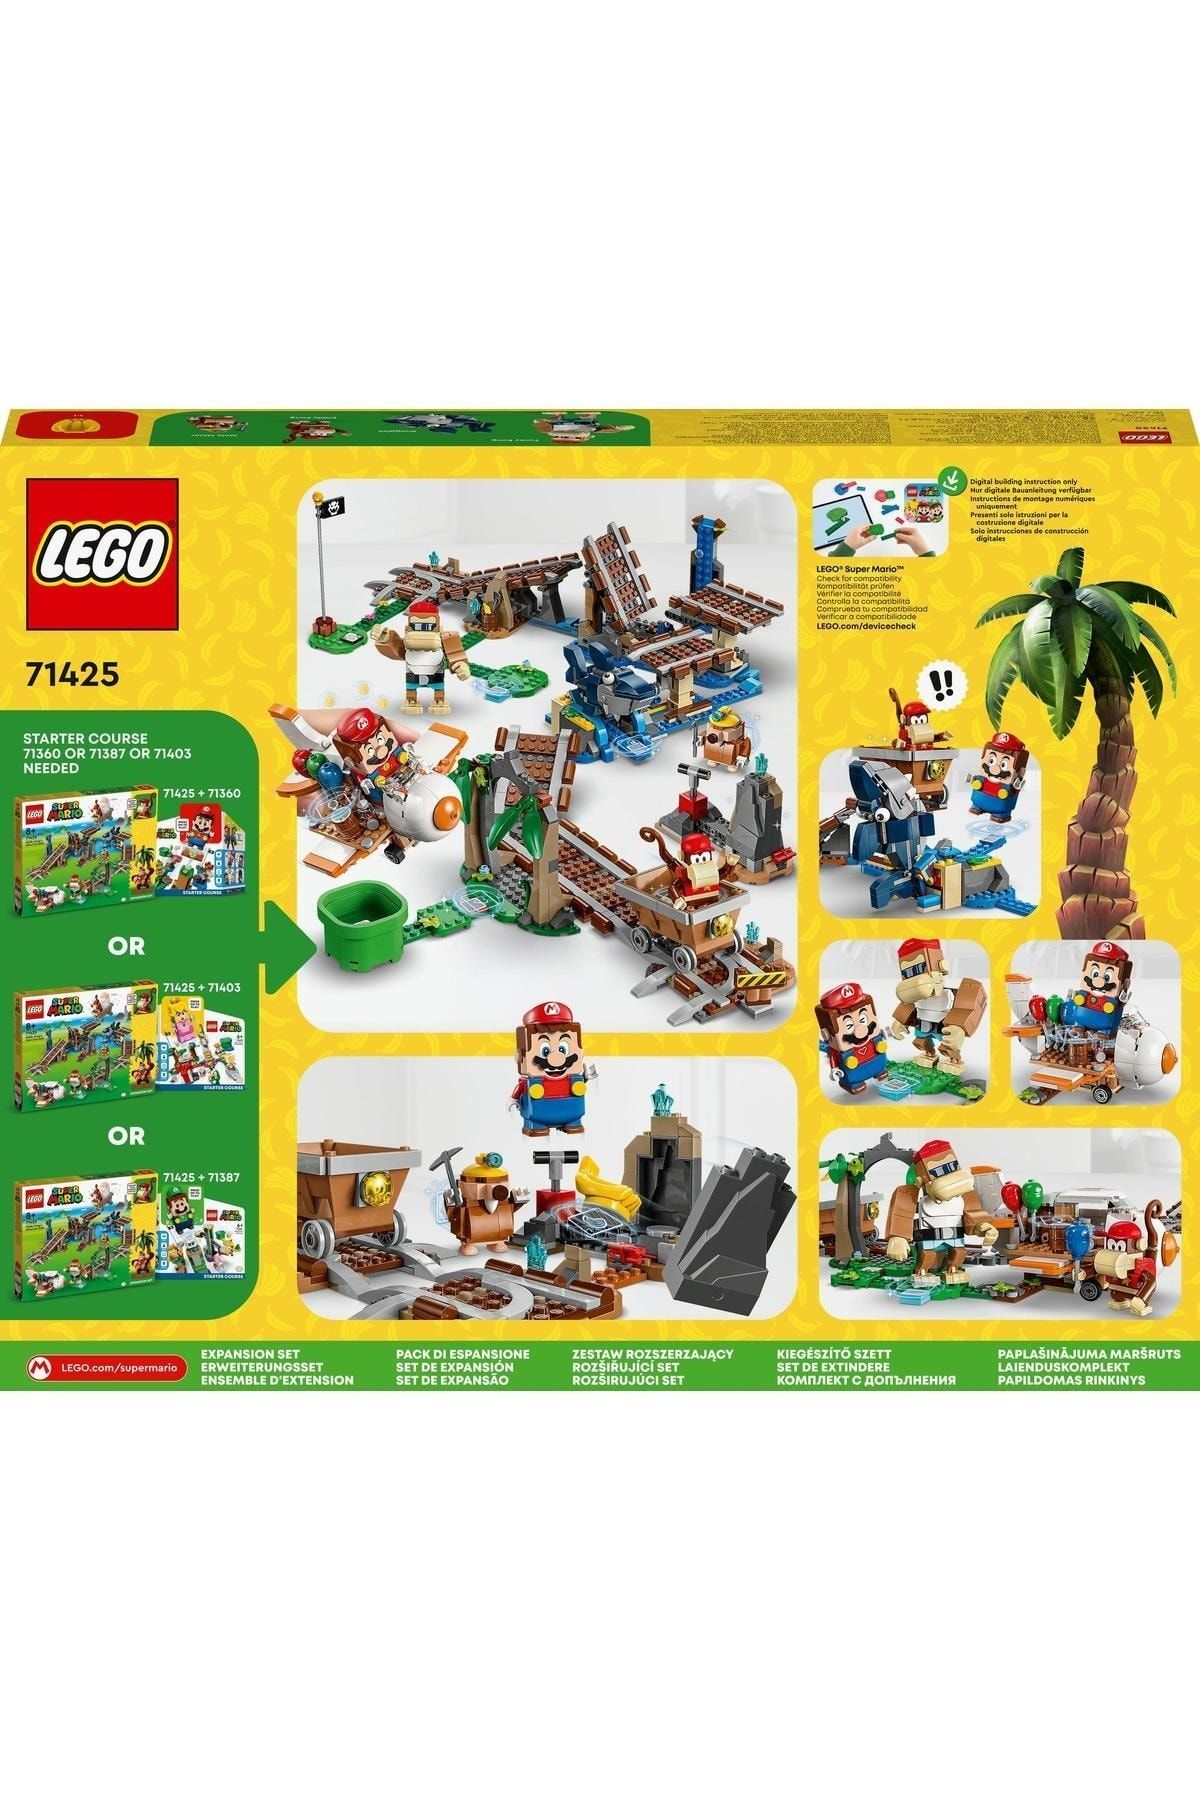 LEGO لگو مجموعه ماجراجویی اضافی سبد خرید ماین سوپر ماریو دیدی کنگ 71425 ست ساختمان اسباب بازی (1157 قطعه)